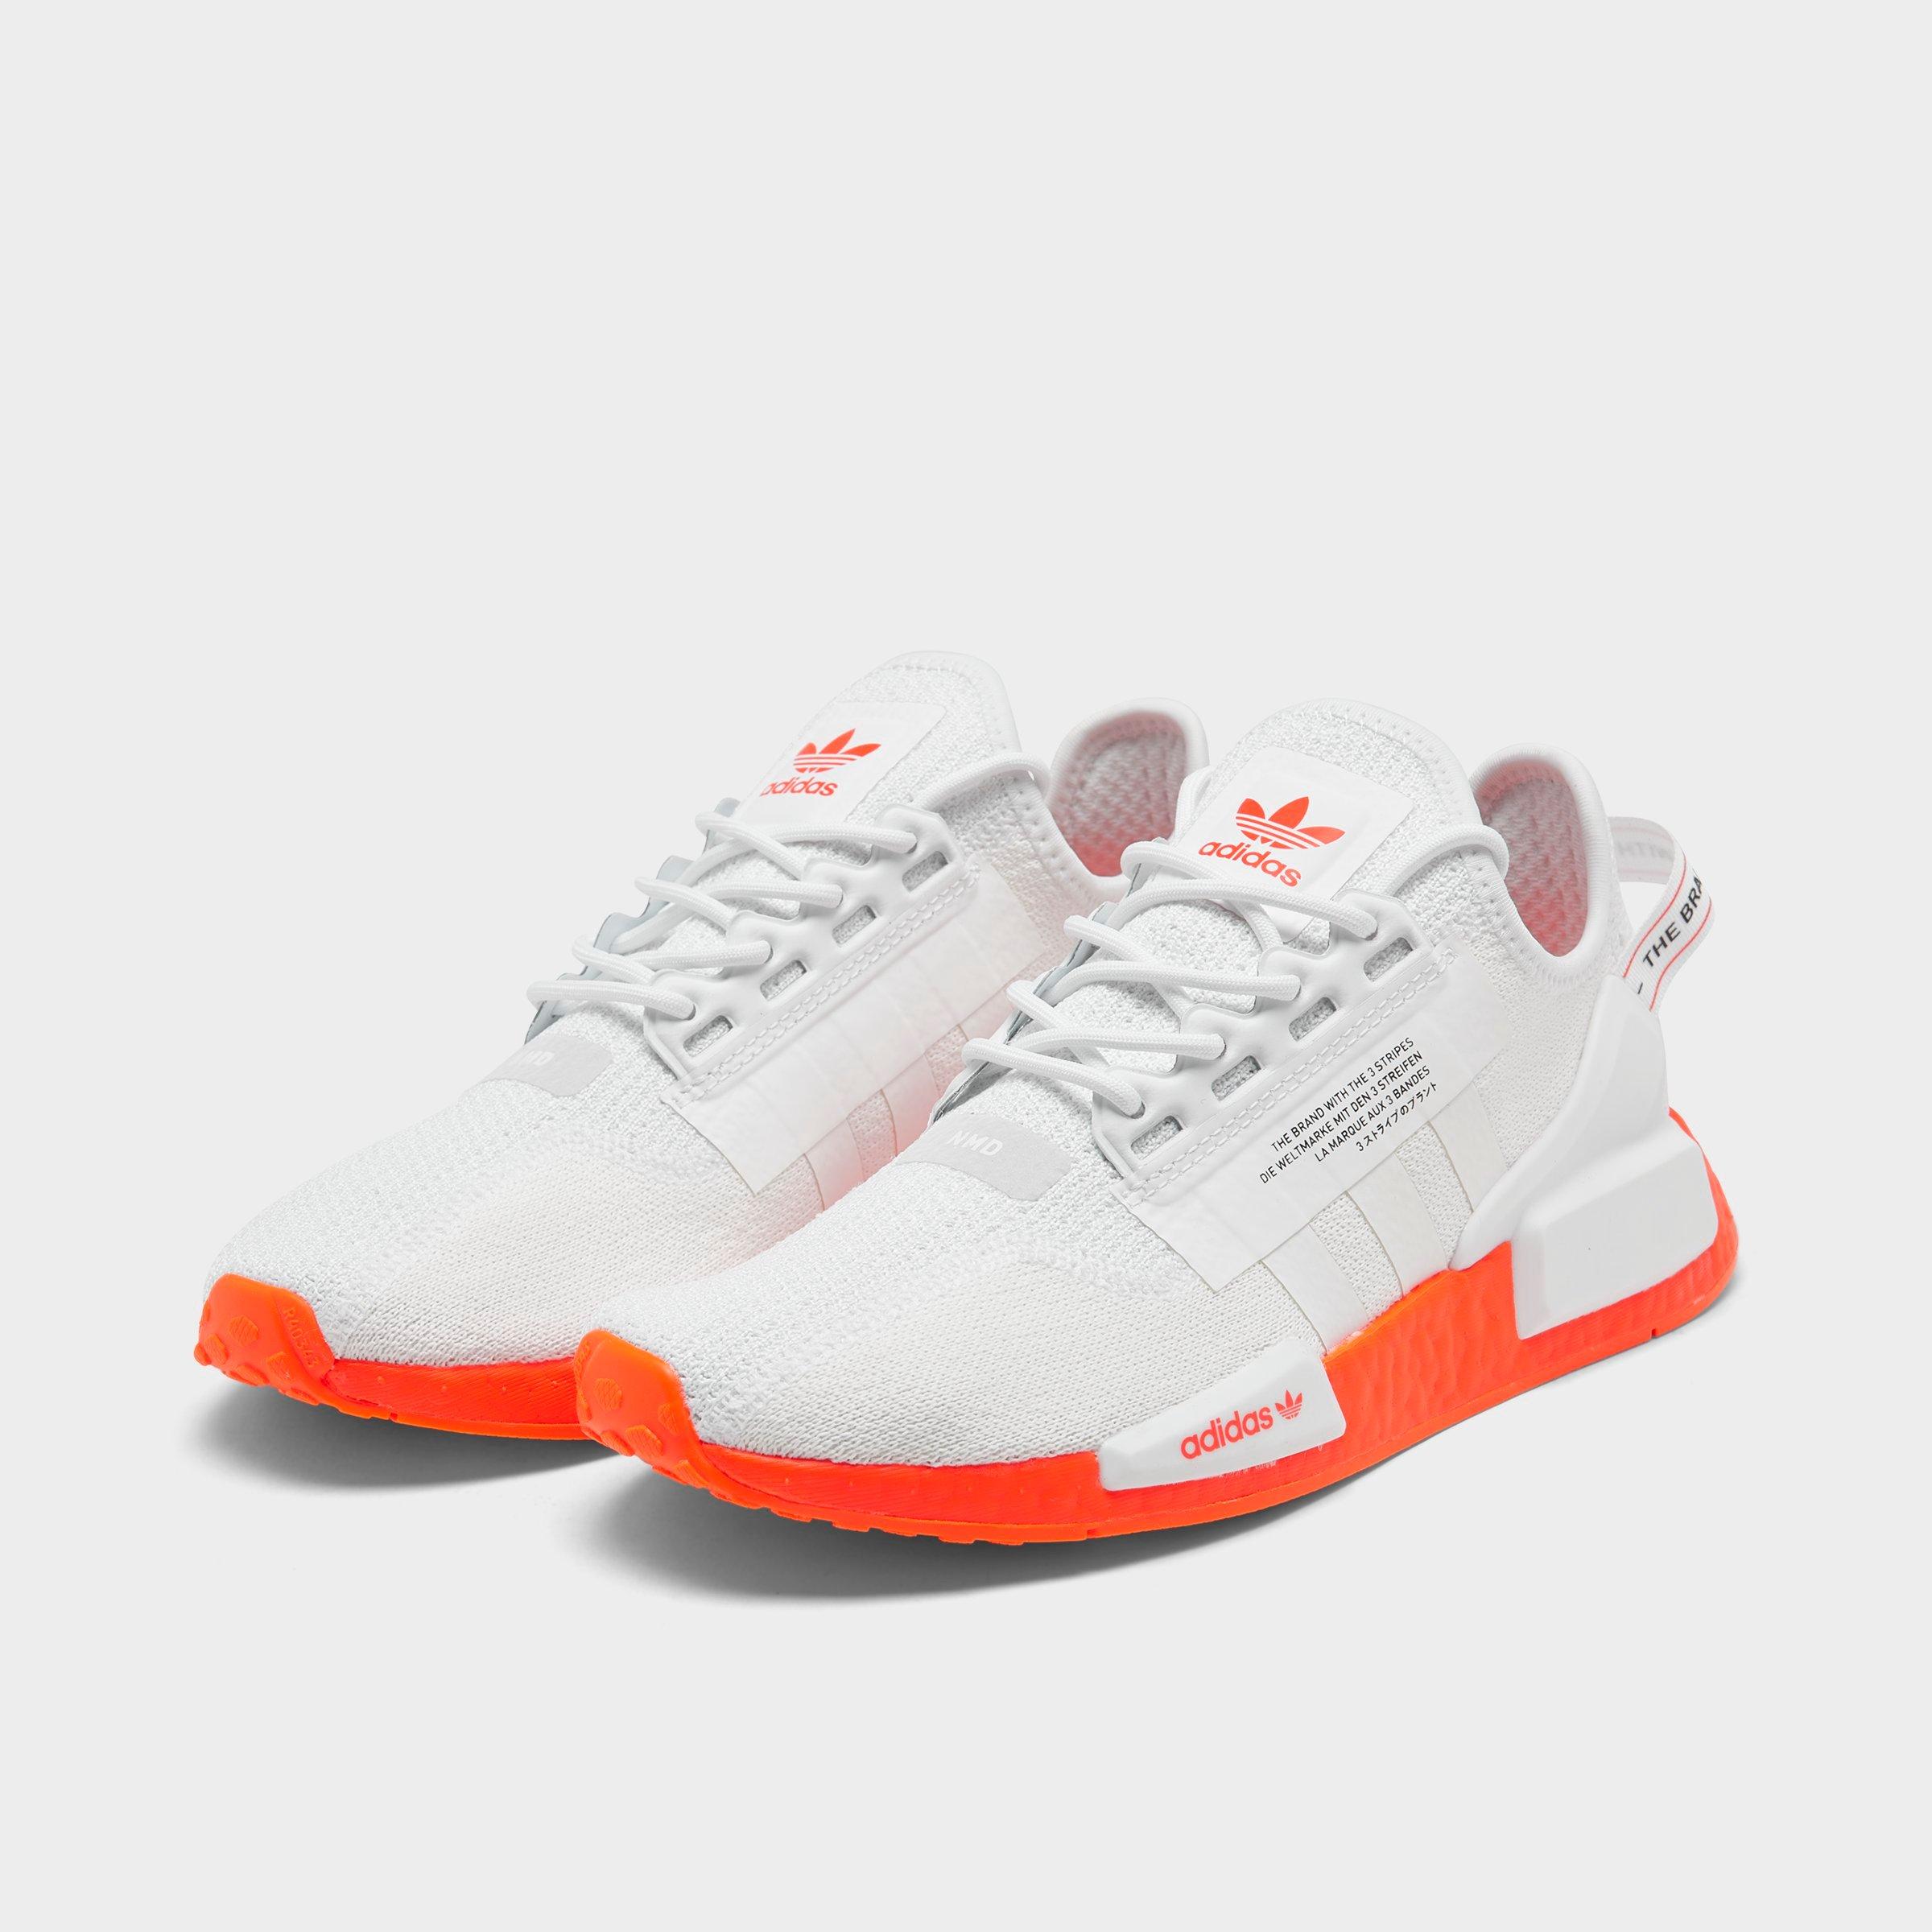 Adidas NMD R1 White Orange Unisex Running Shoes DA8866